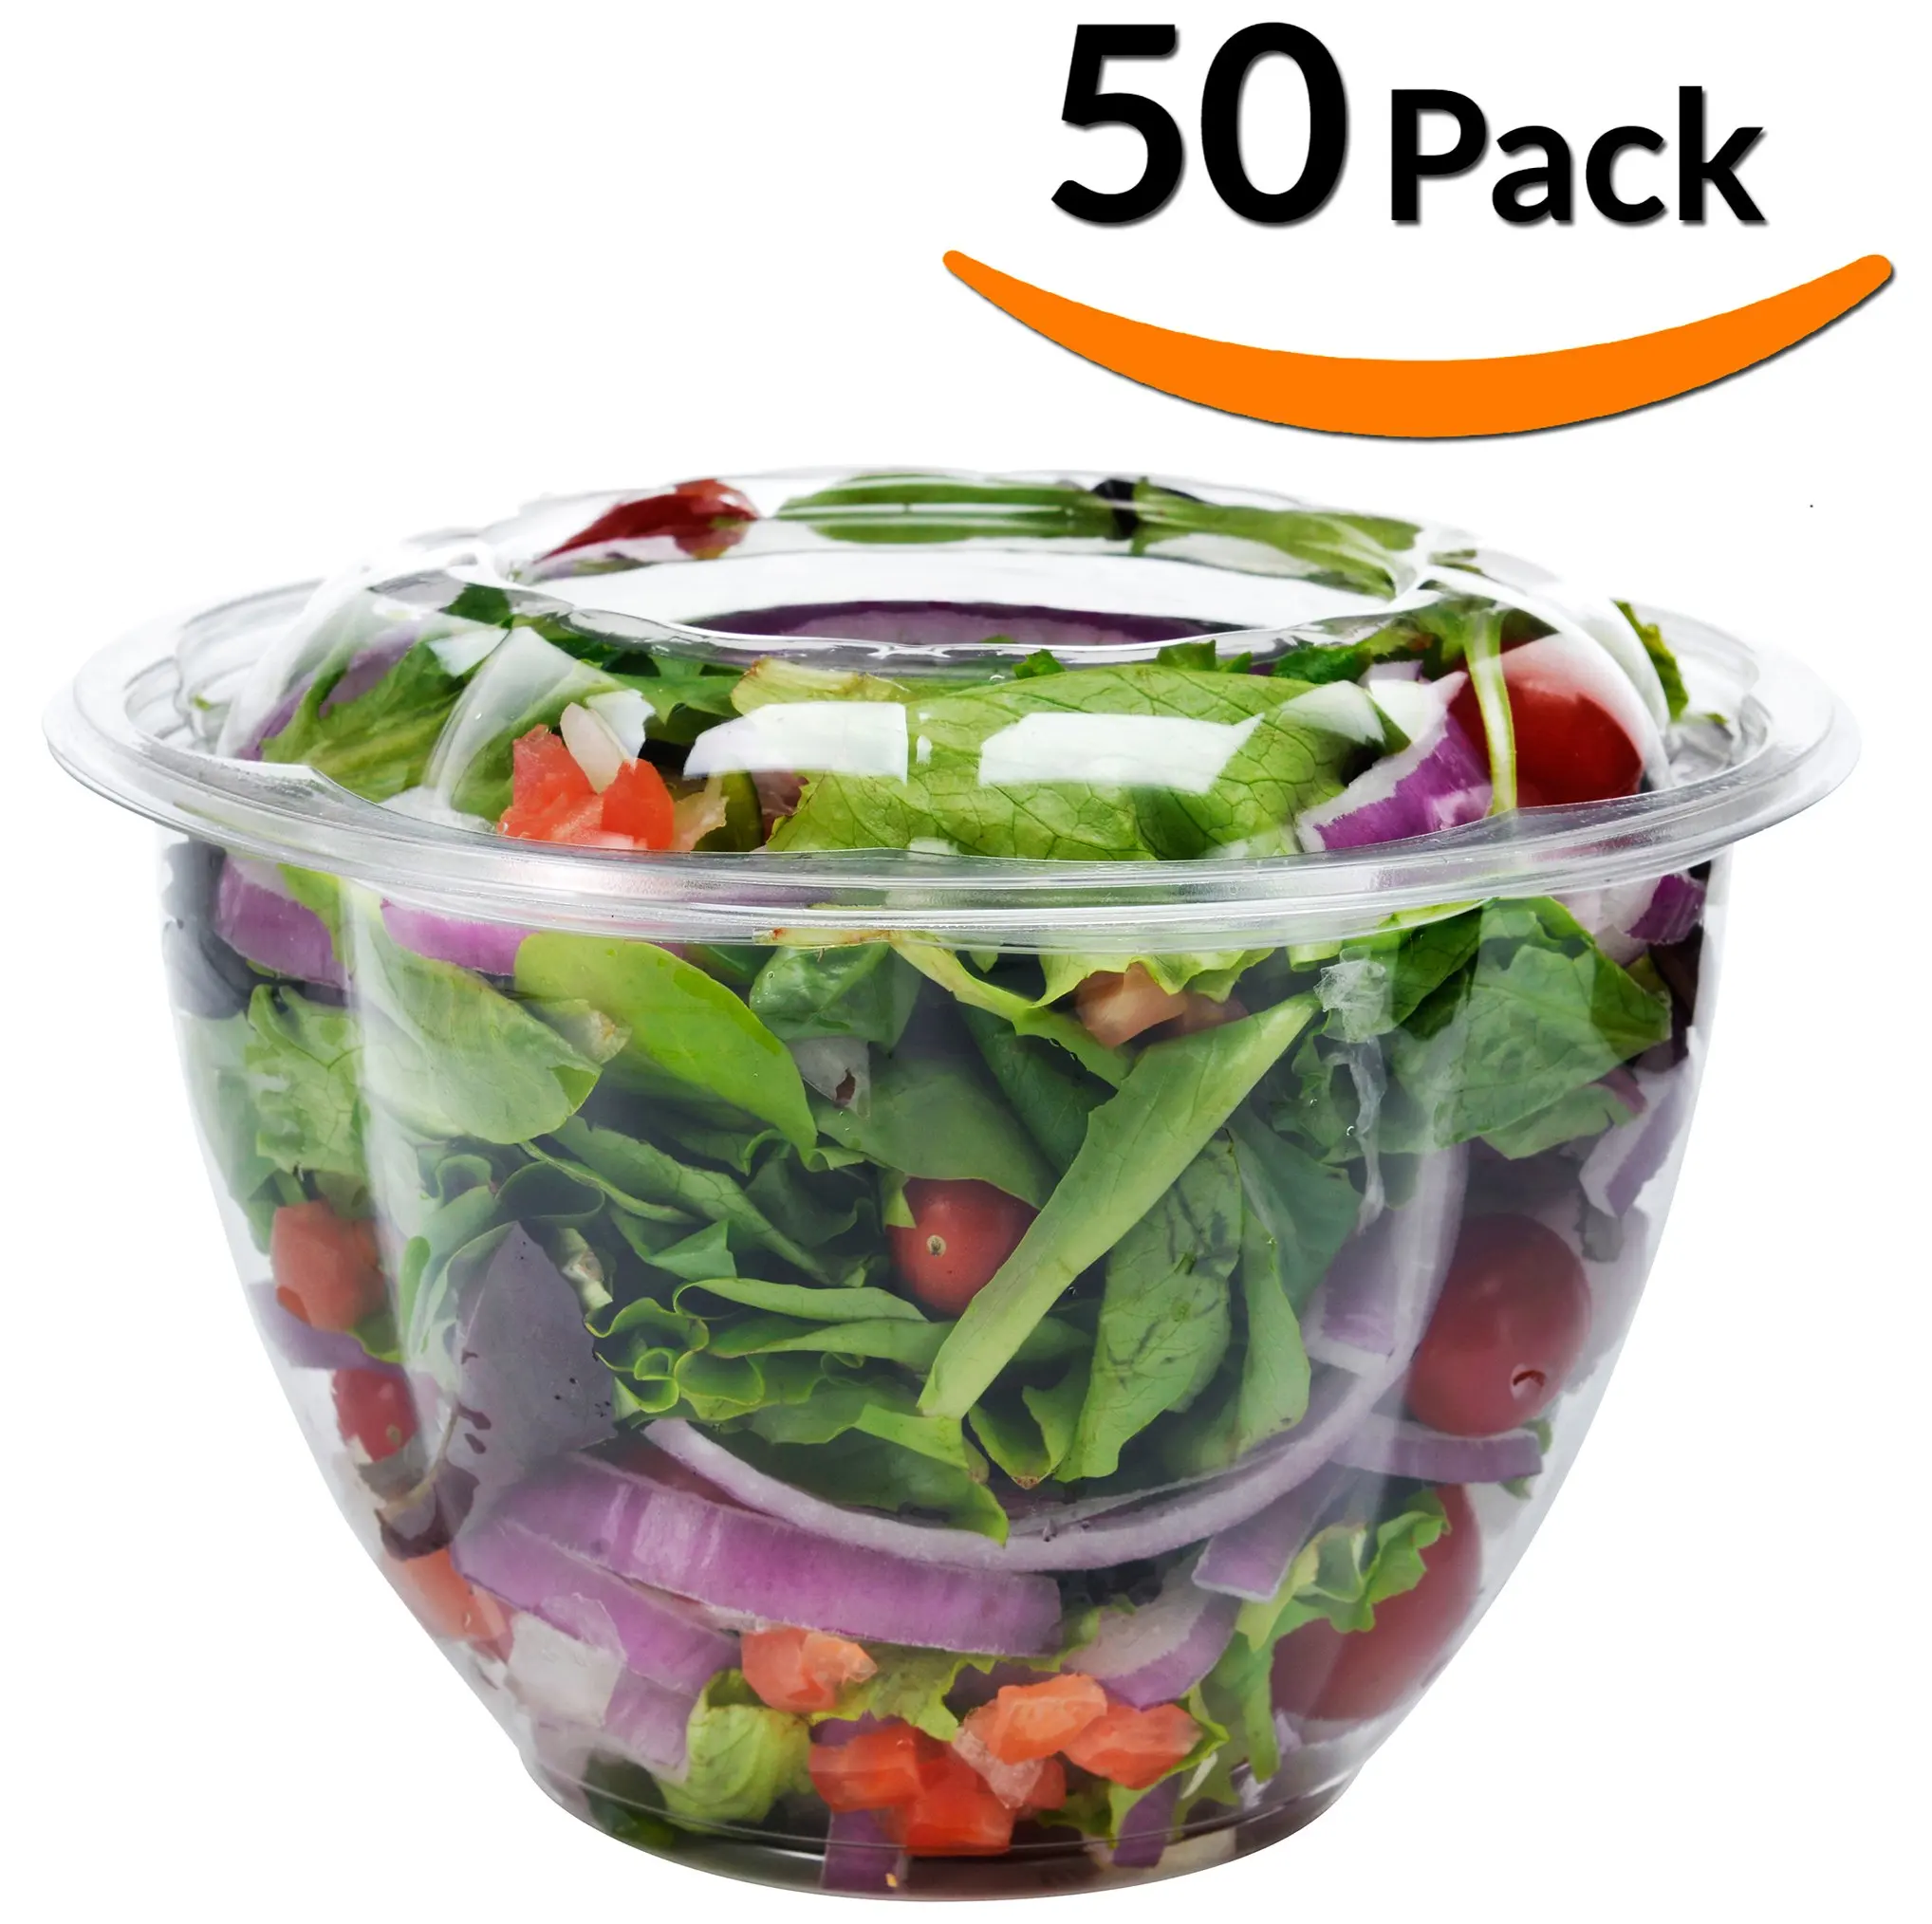 Cheap Large Salad Bowls Plastic, find Large Salad Bowls